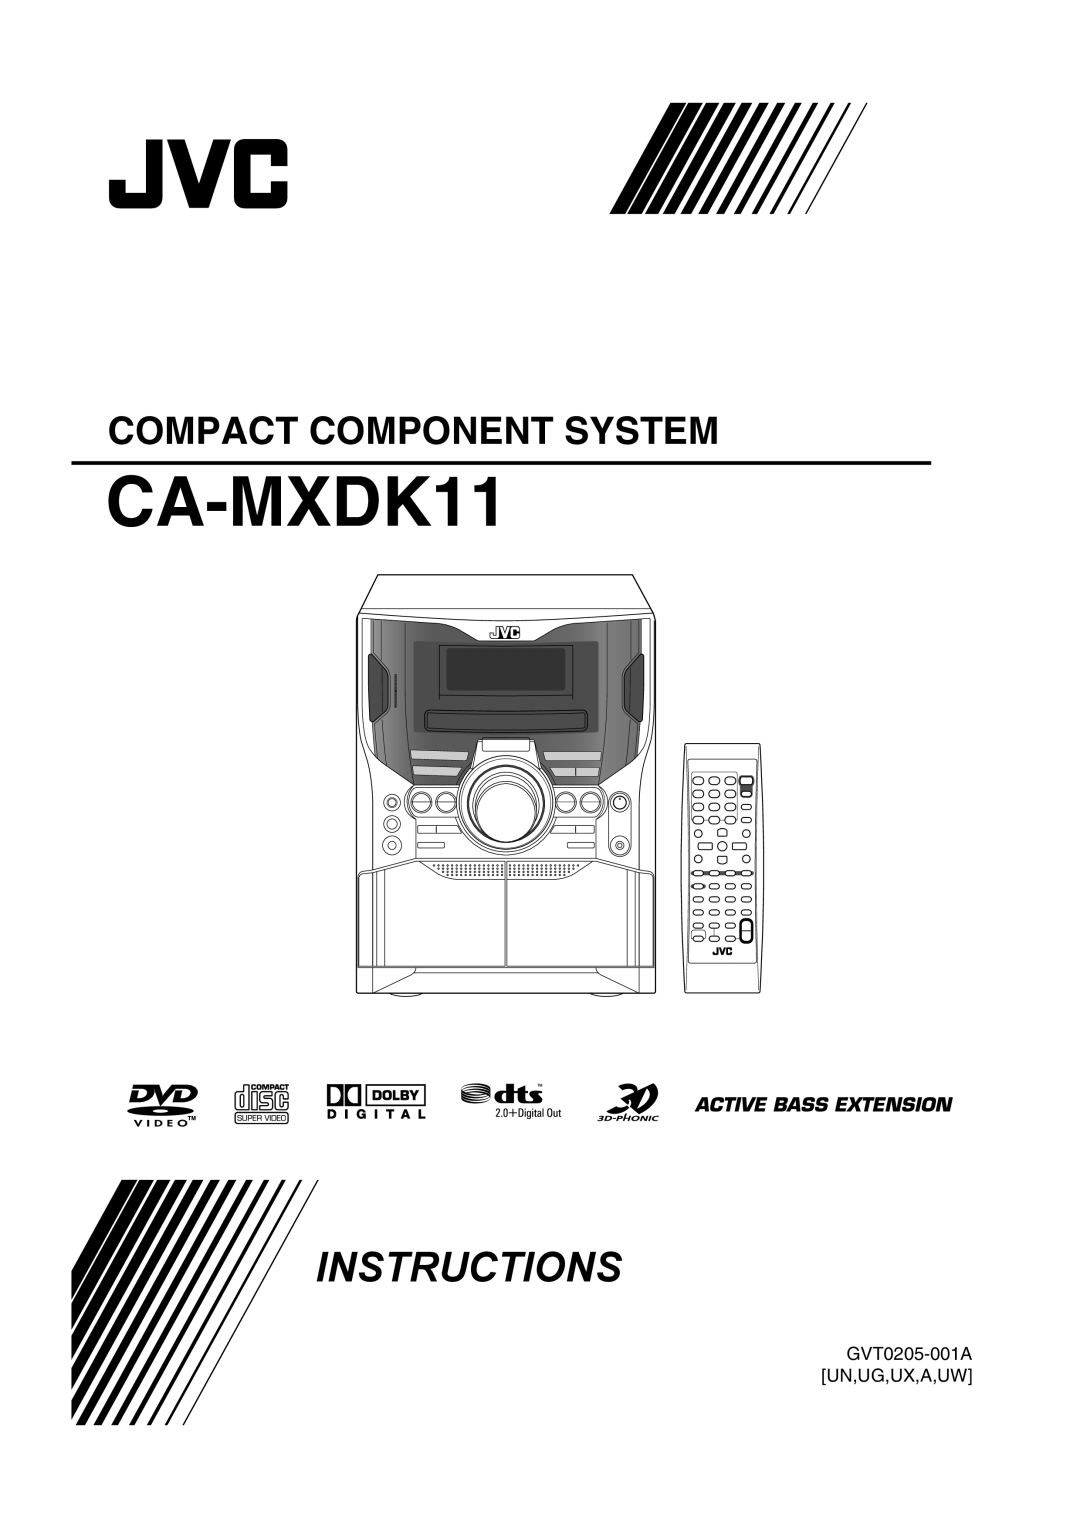 JVC CA-MXDK11 manual Instructions, Compact Component System, GVT0205-001AUN,UG,UX,A,UW 